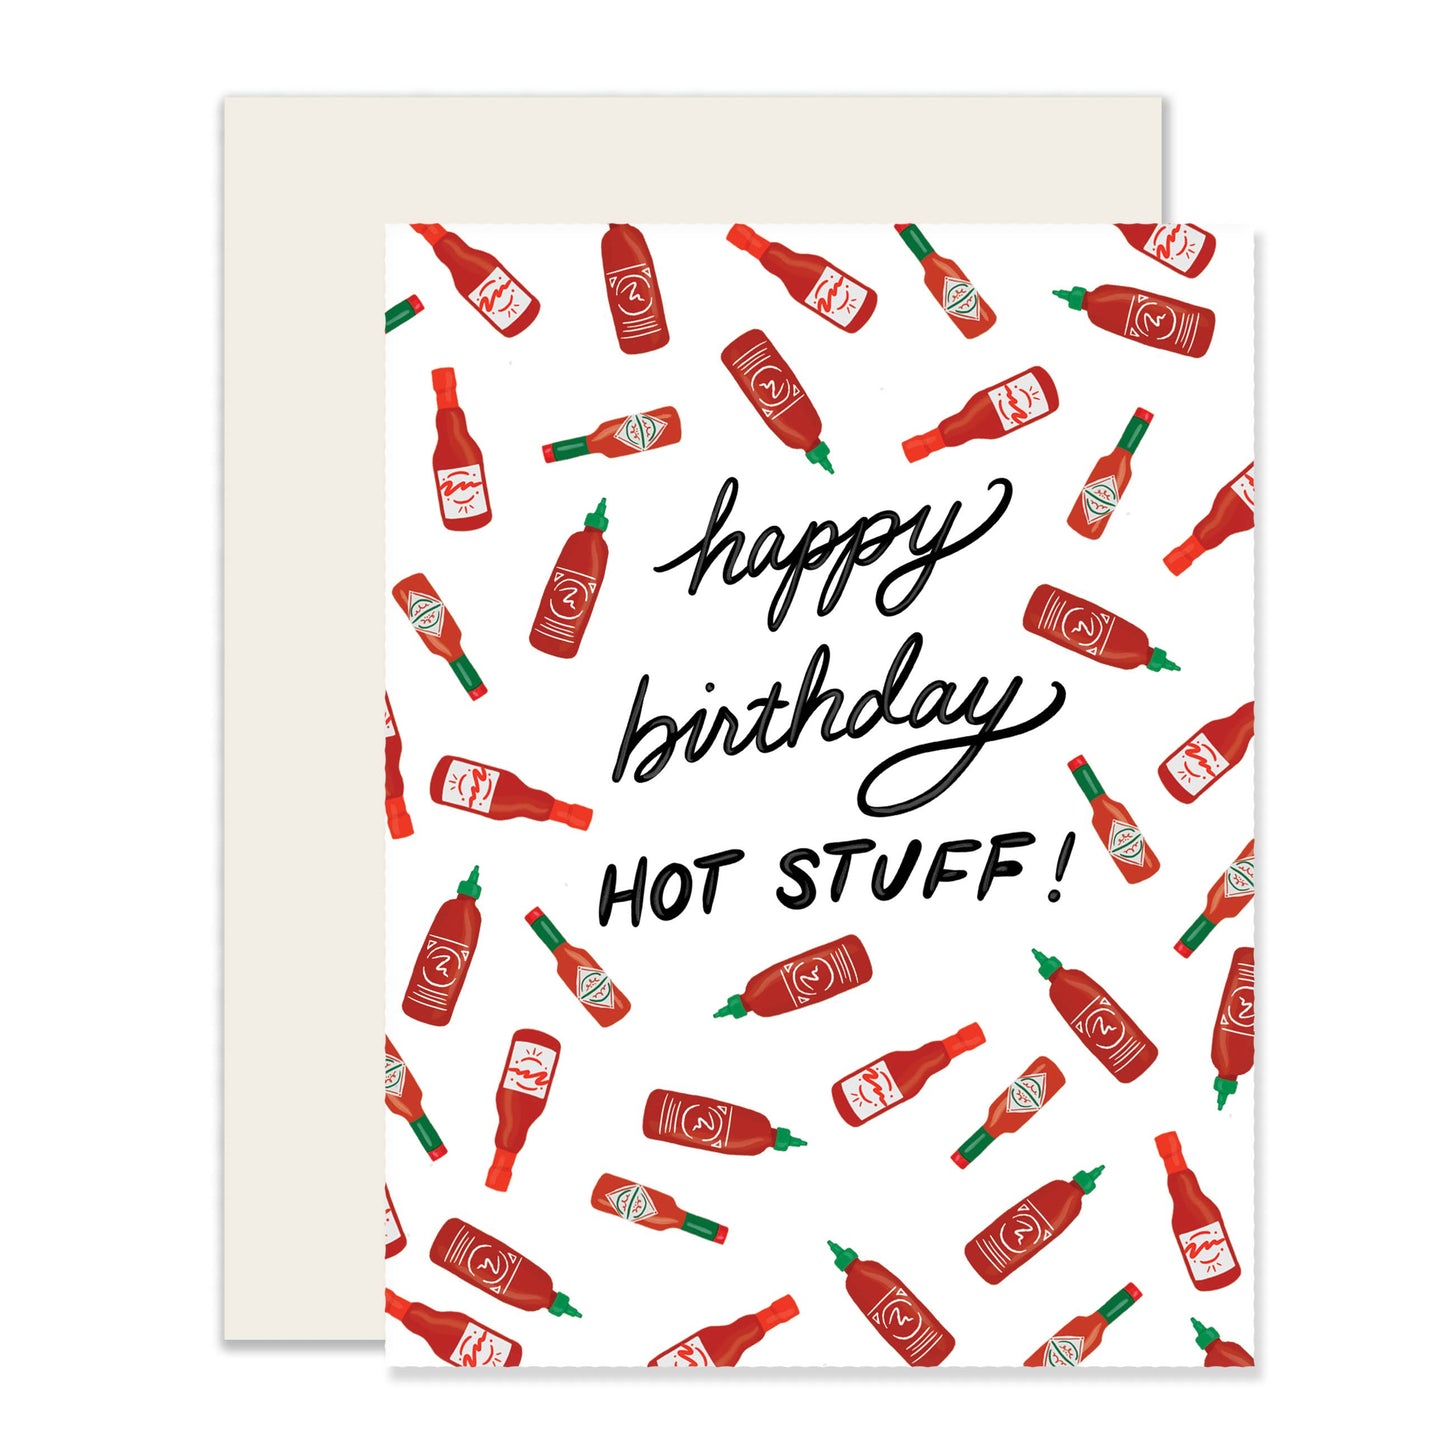 Hot Sauce hot stuff birthday greeting card that reads "Happy Birthday Hot Stuff!" 